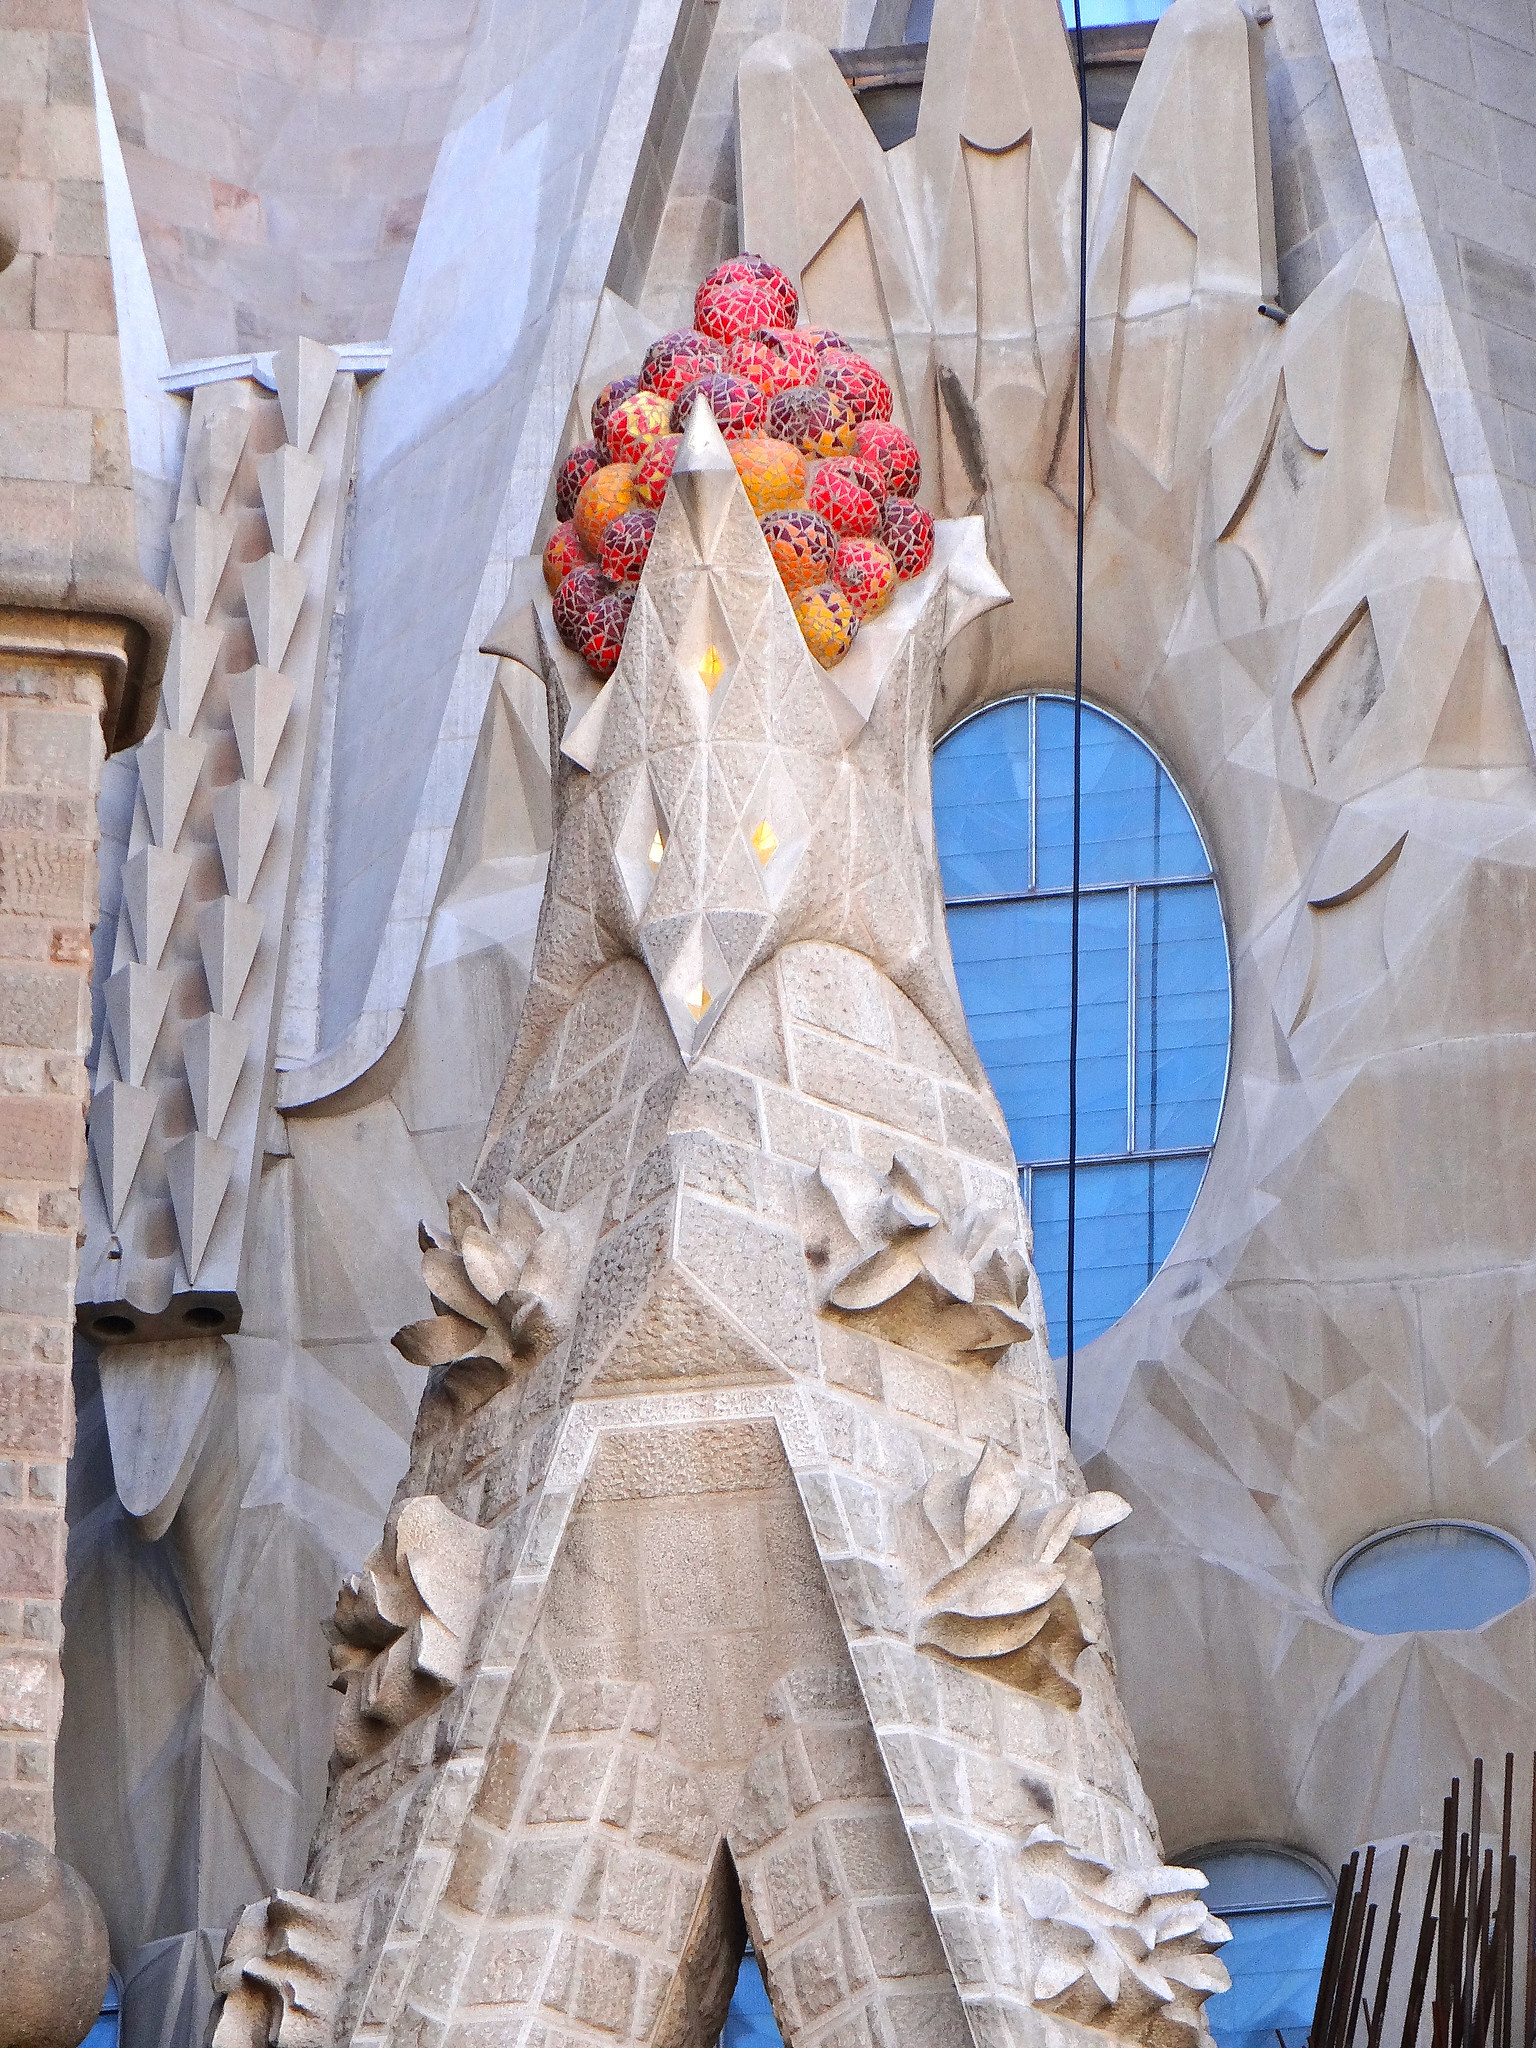 fruit on facade of Sagrada Familia